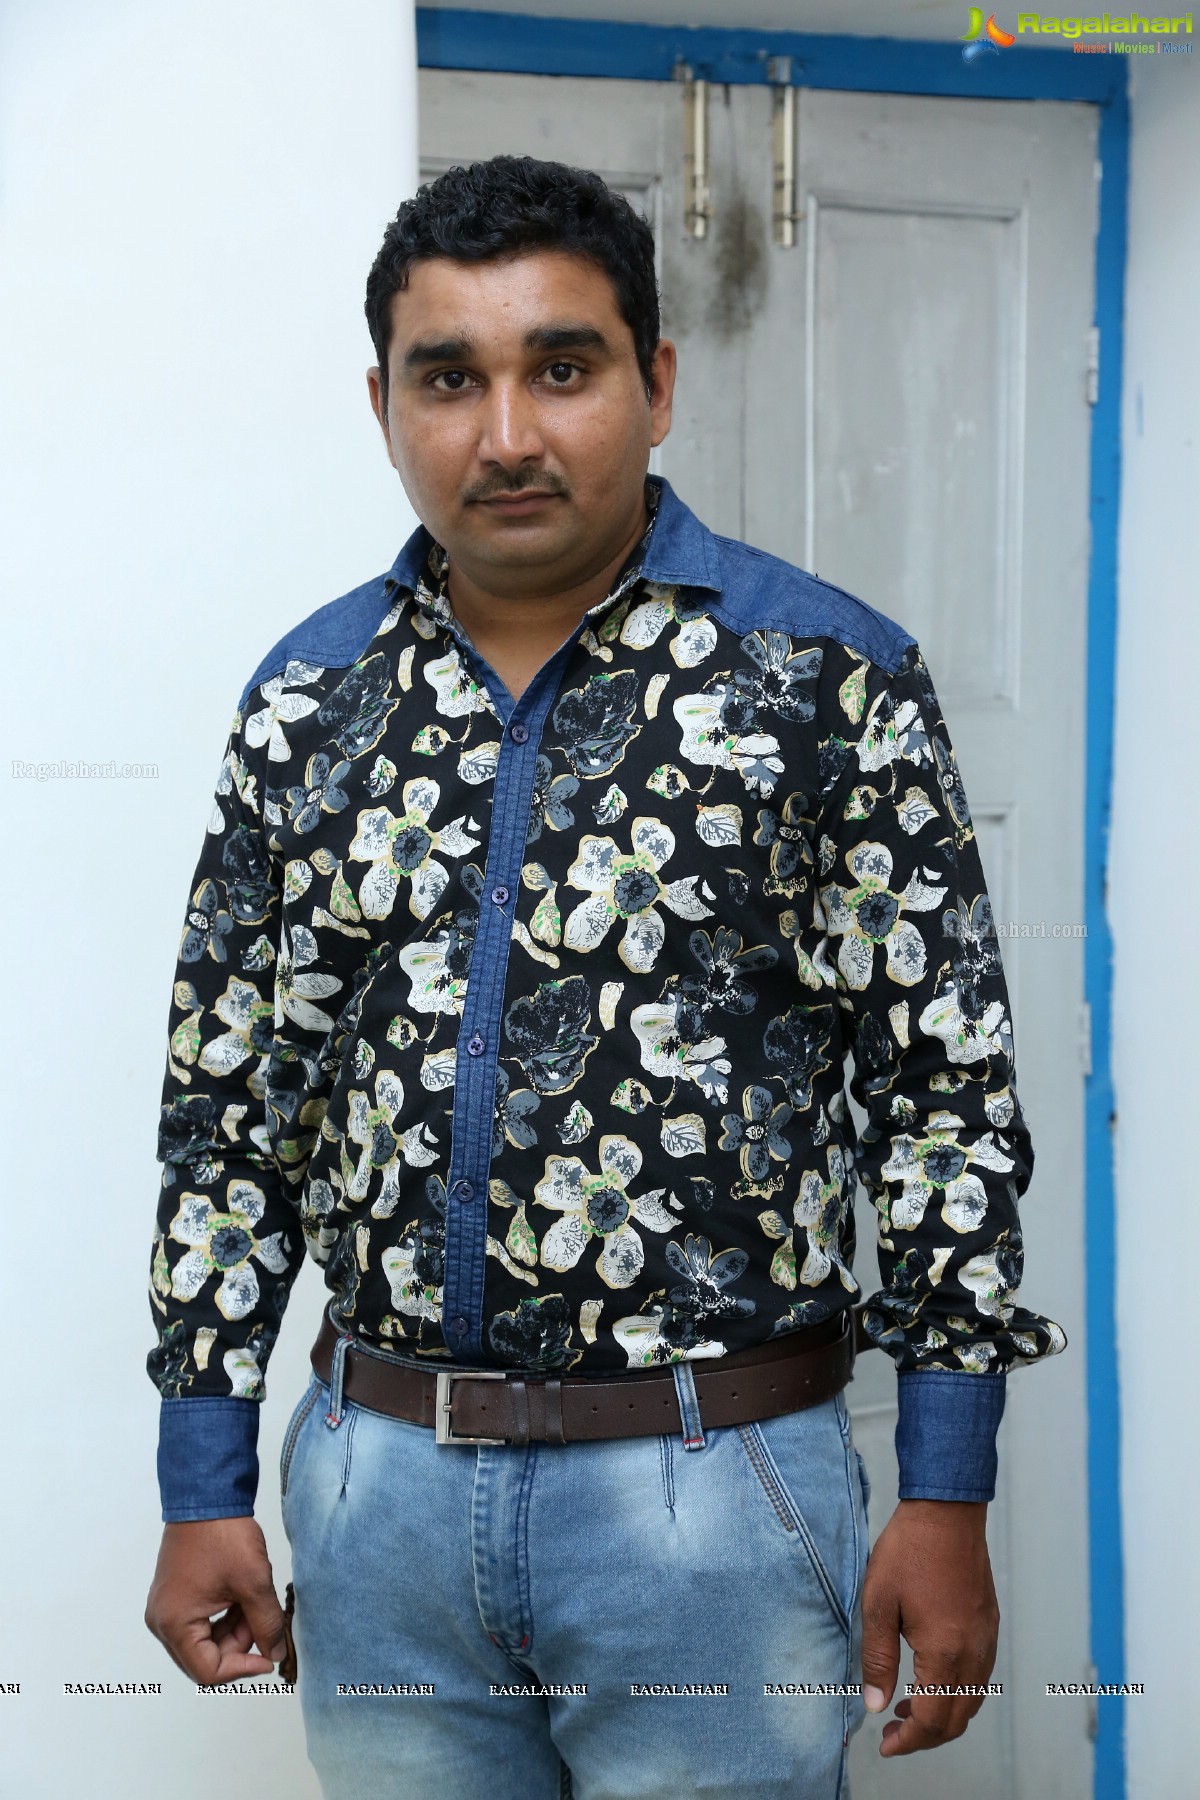 Silk and Cotton Expo Curtain Raiser by Crafts and Weavers Association at Joyees Lifestyle at Taj Banjara, Hyderabad